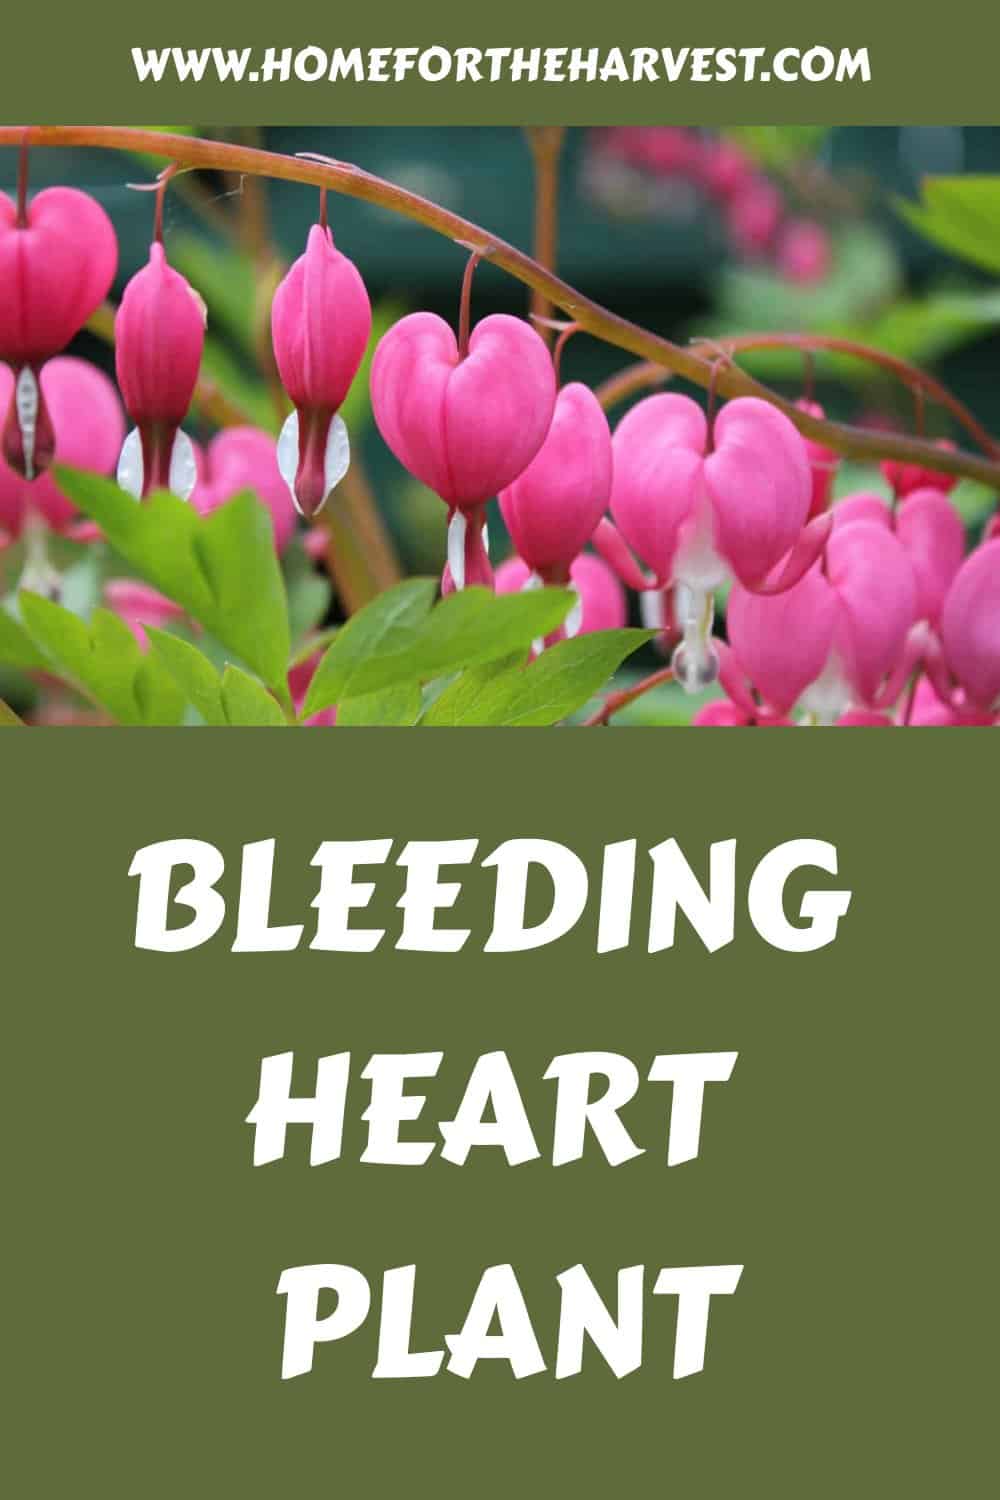 Bleeding heart plant generated pin 42324